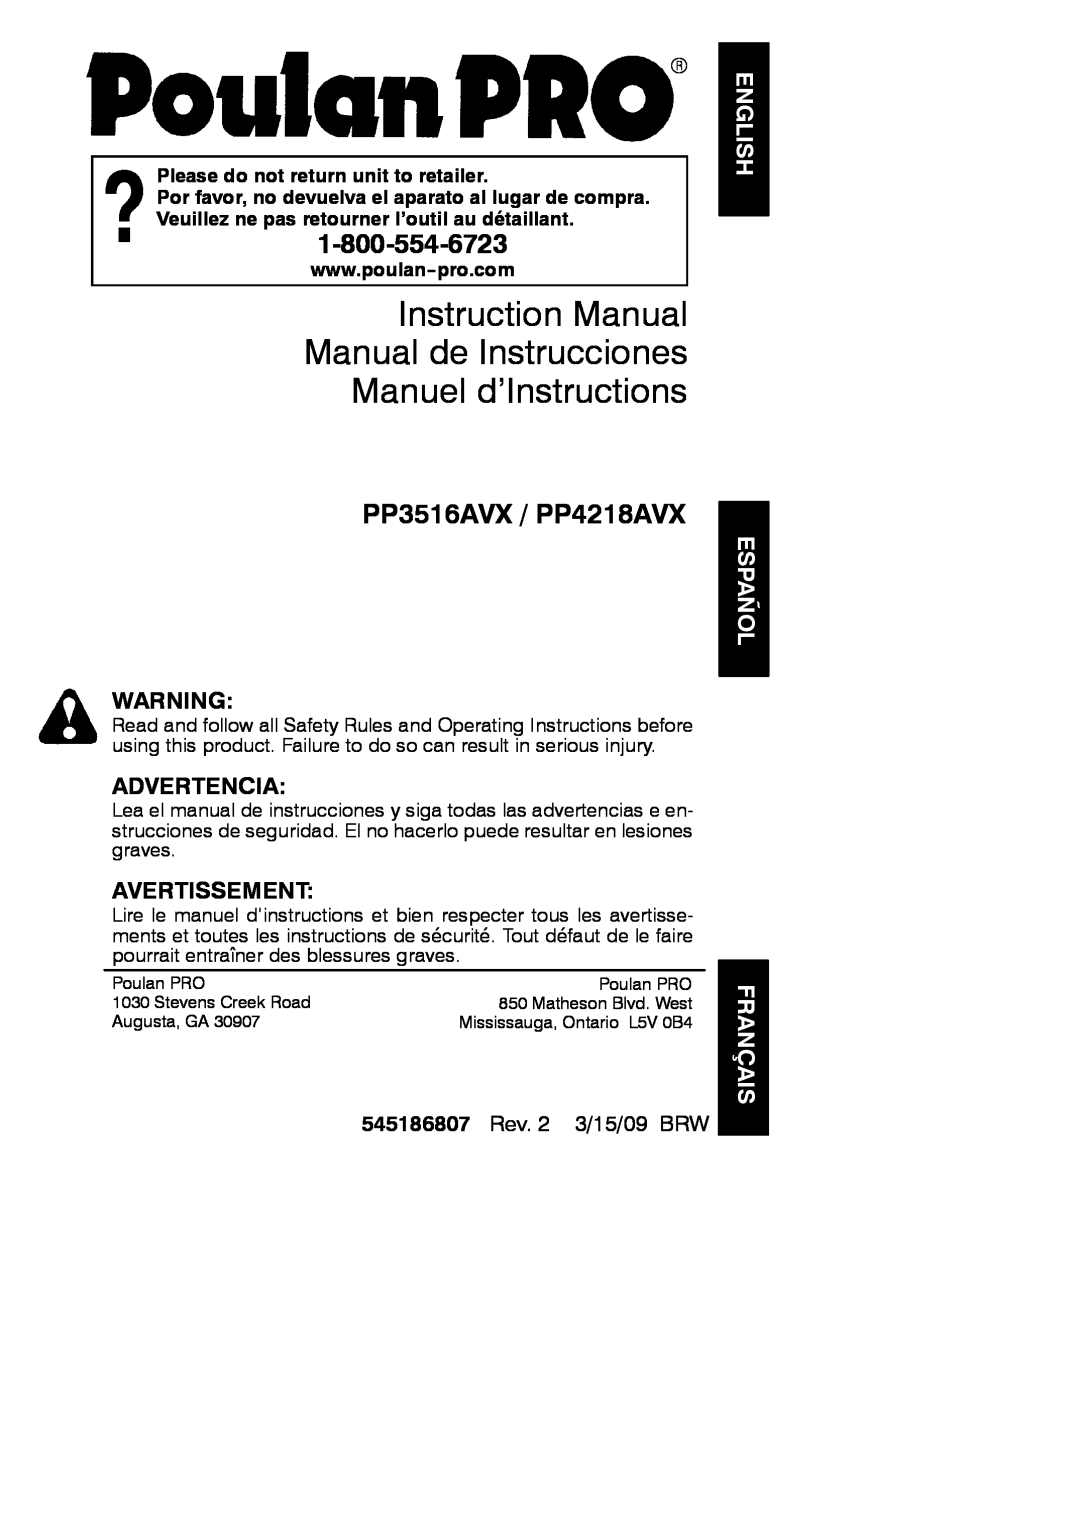 Poulan instruction manual English, Español Français, PP3516AVX / PP4218AVX, Advertencia, Avertissement 